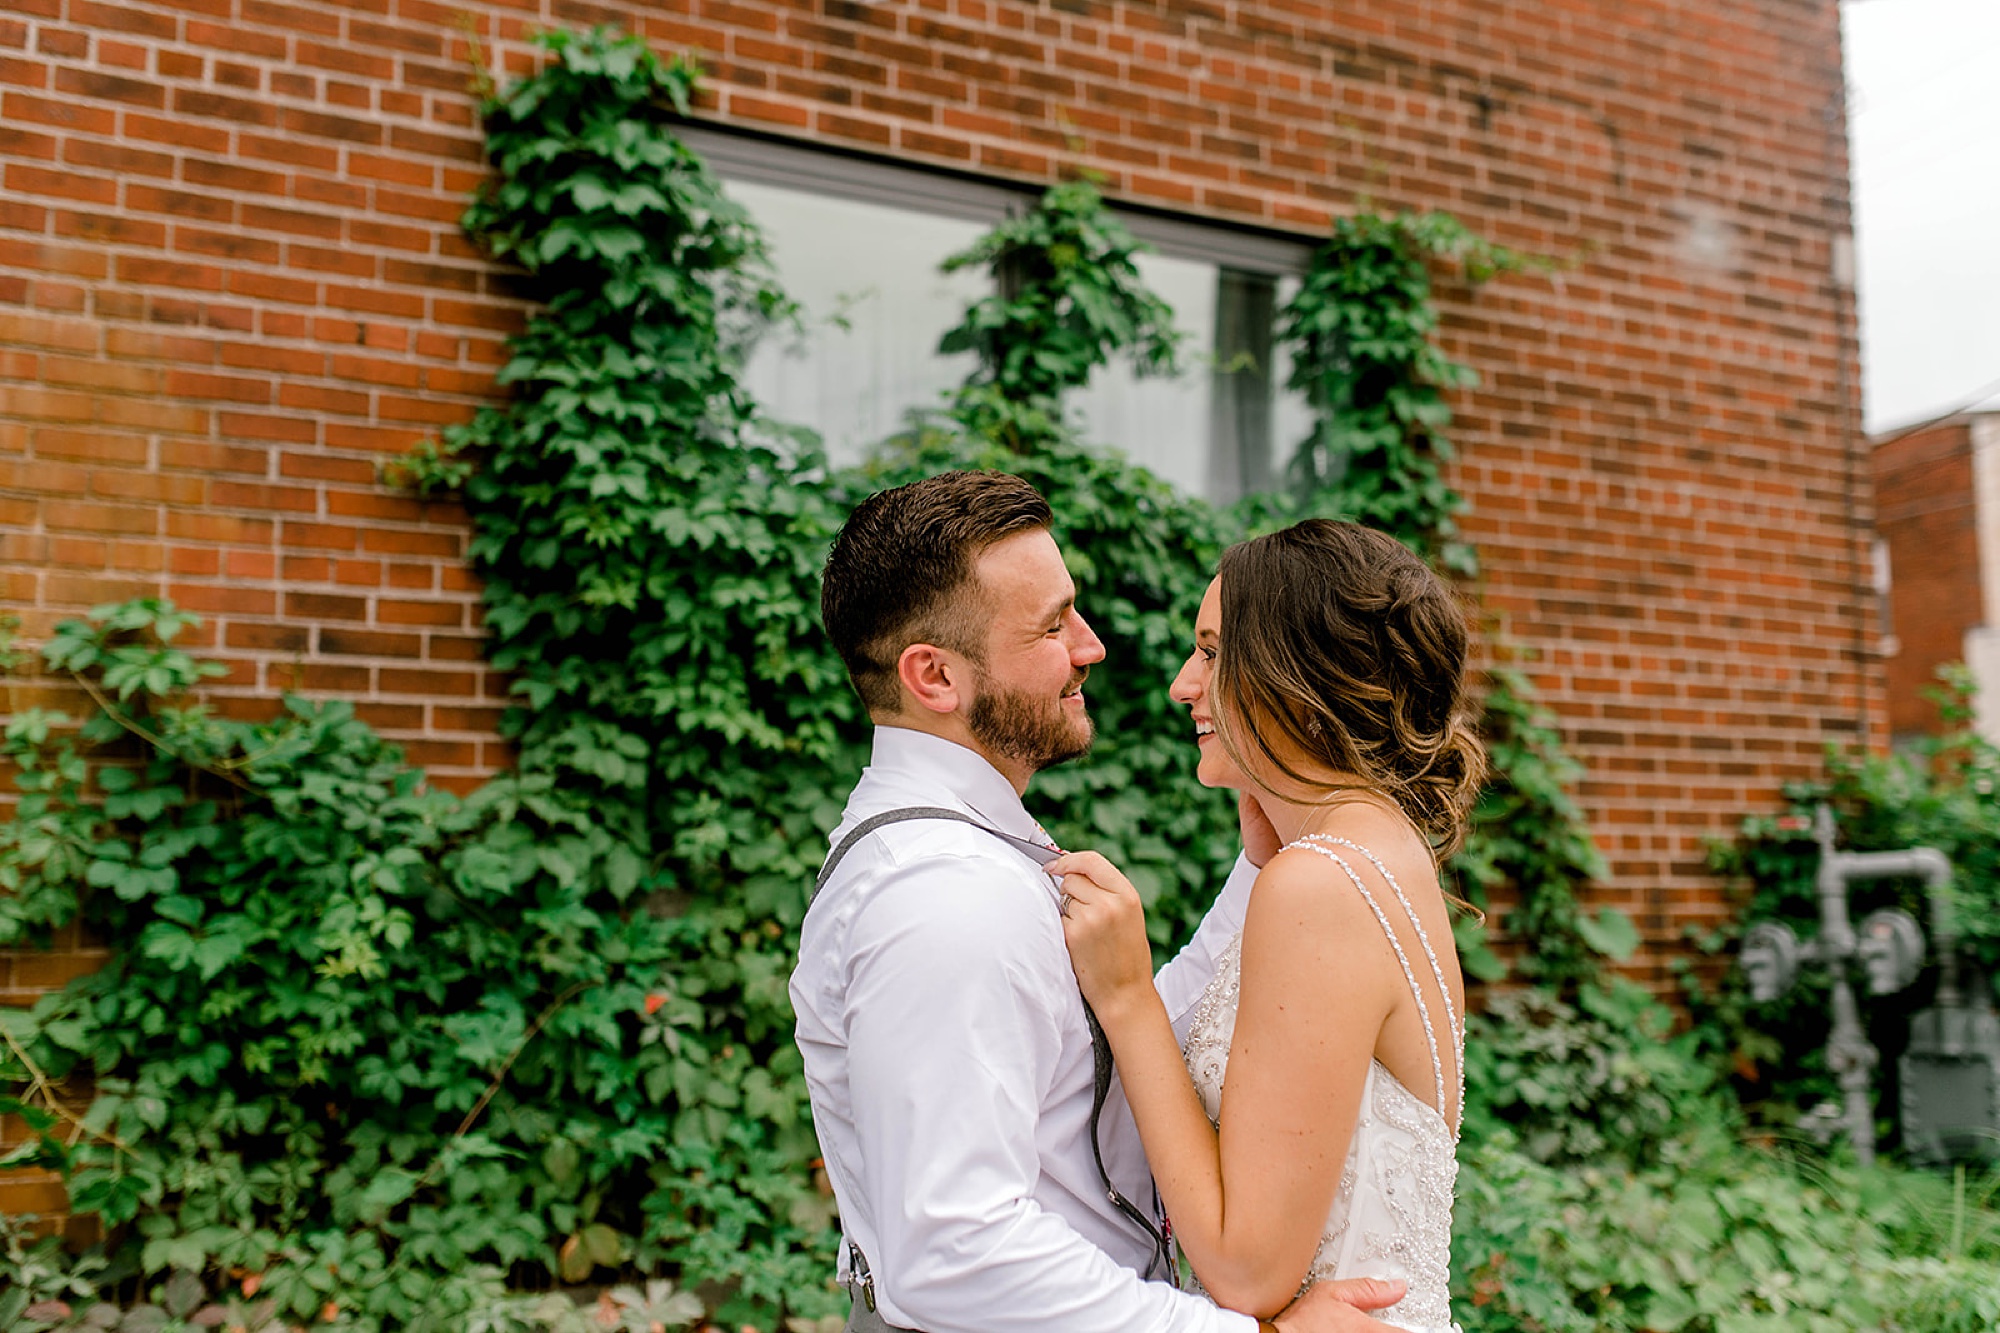 Toledo OH wedding venues photographed by Lauren Beers Photography 